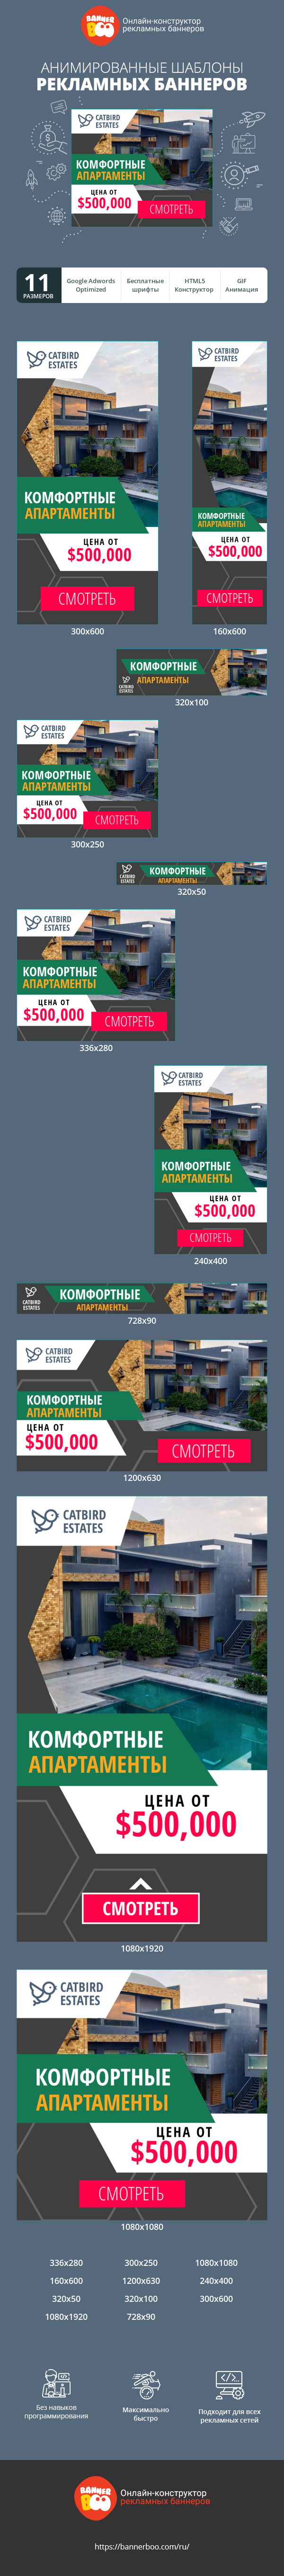 Комфортные апартаменты — цена от $500000